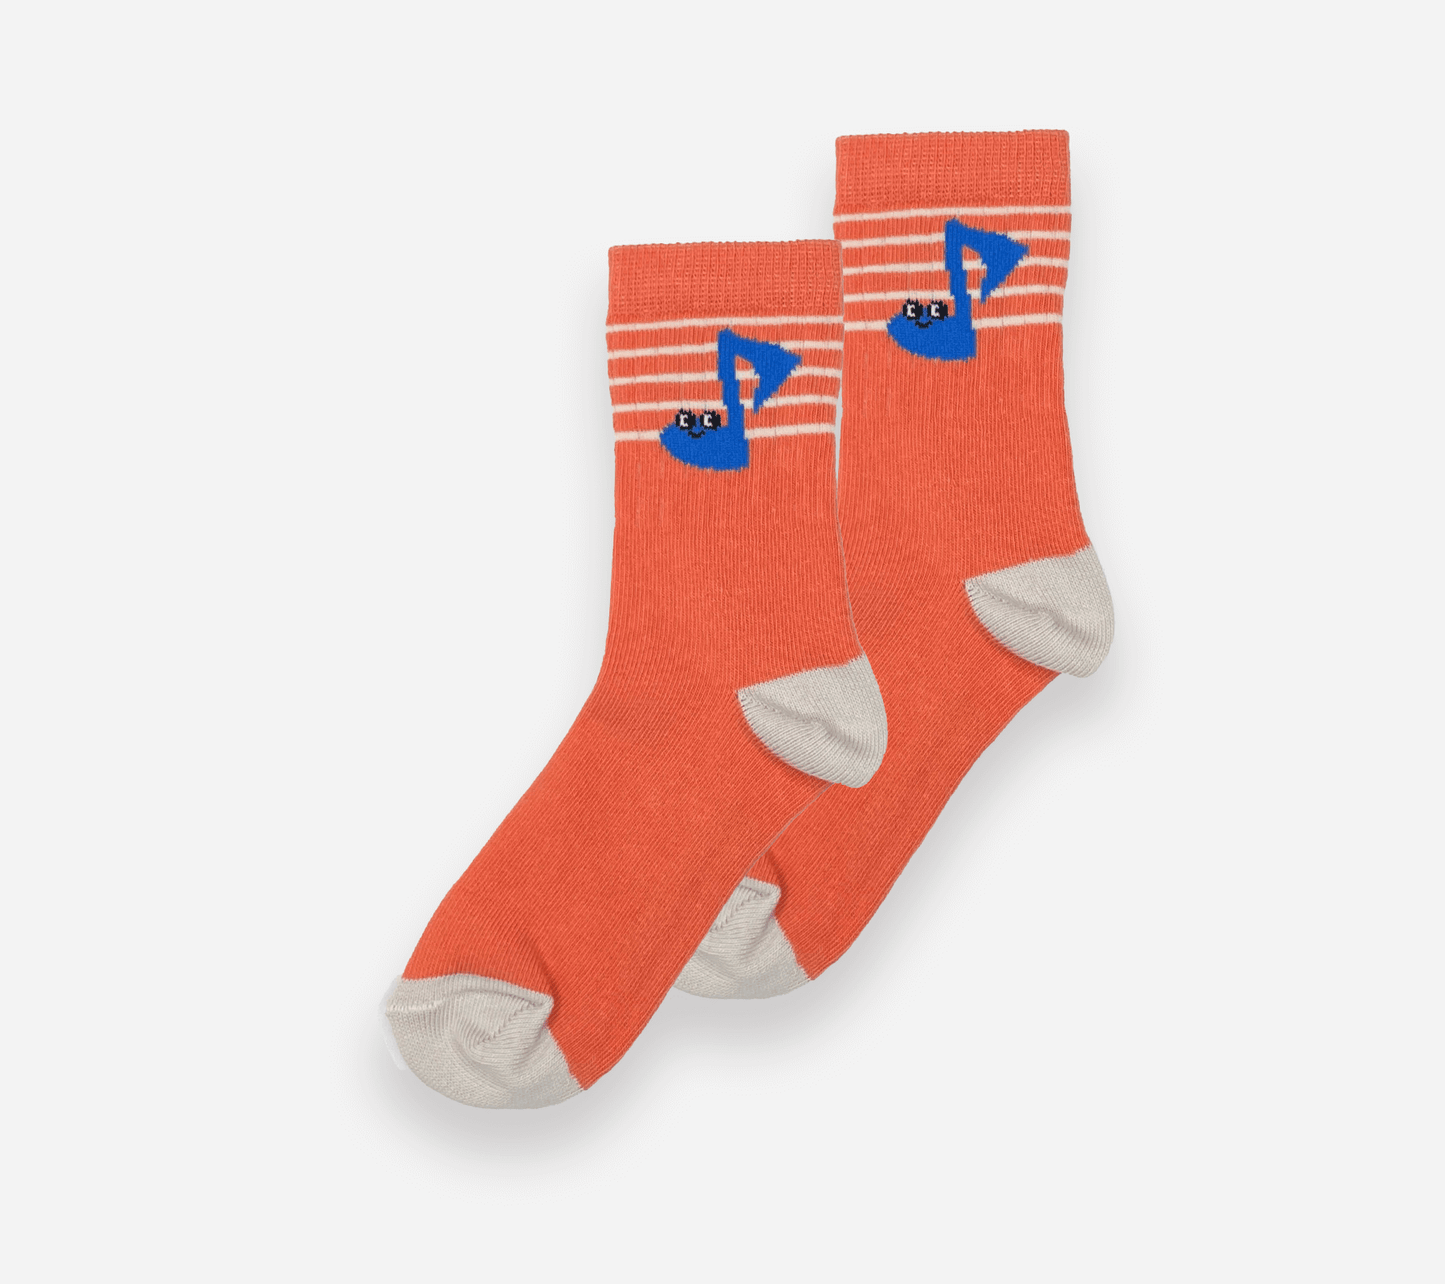 Maison Tadaboum Note Socks - Kinder Sokken - Oranje1